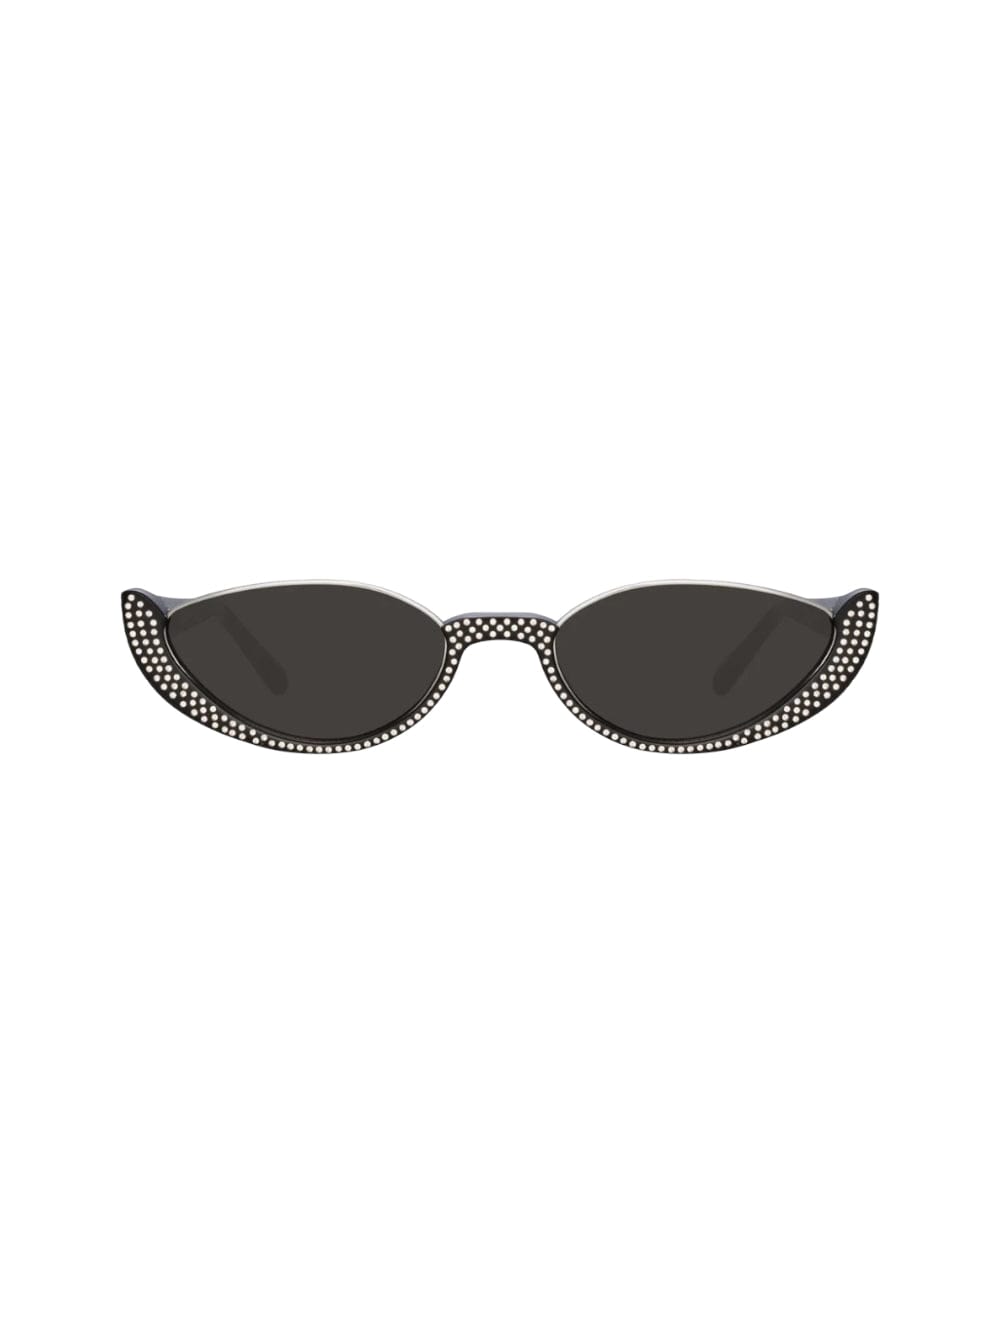 linda farrow robyn - swarovski - black sunglasses